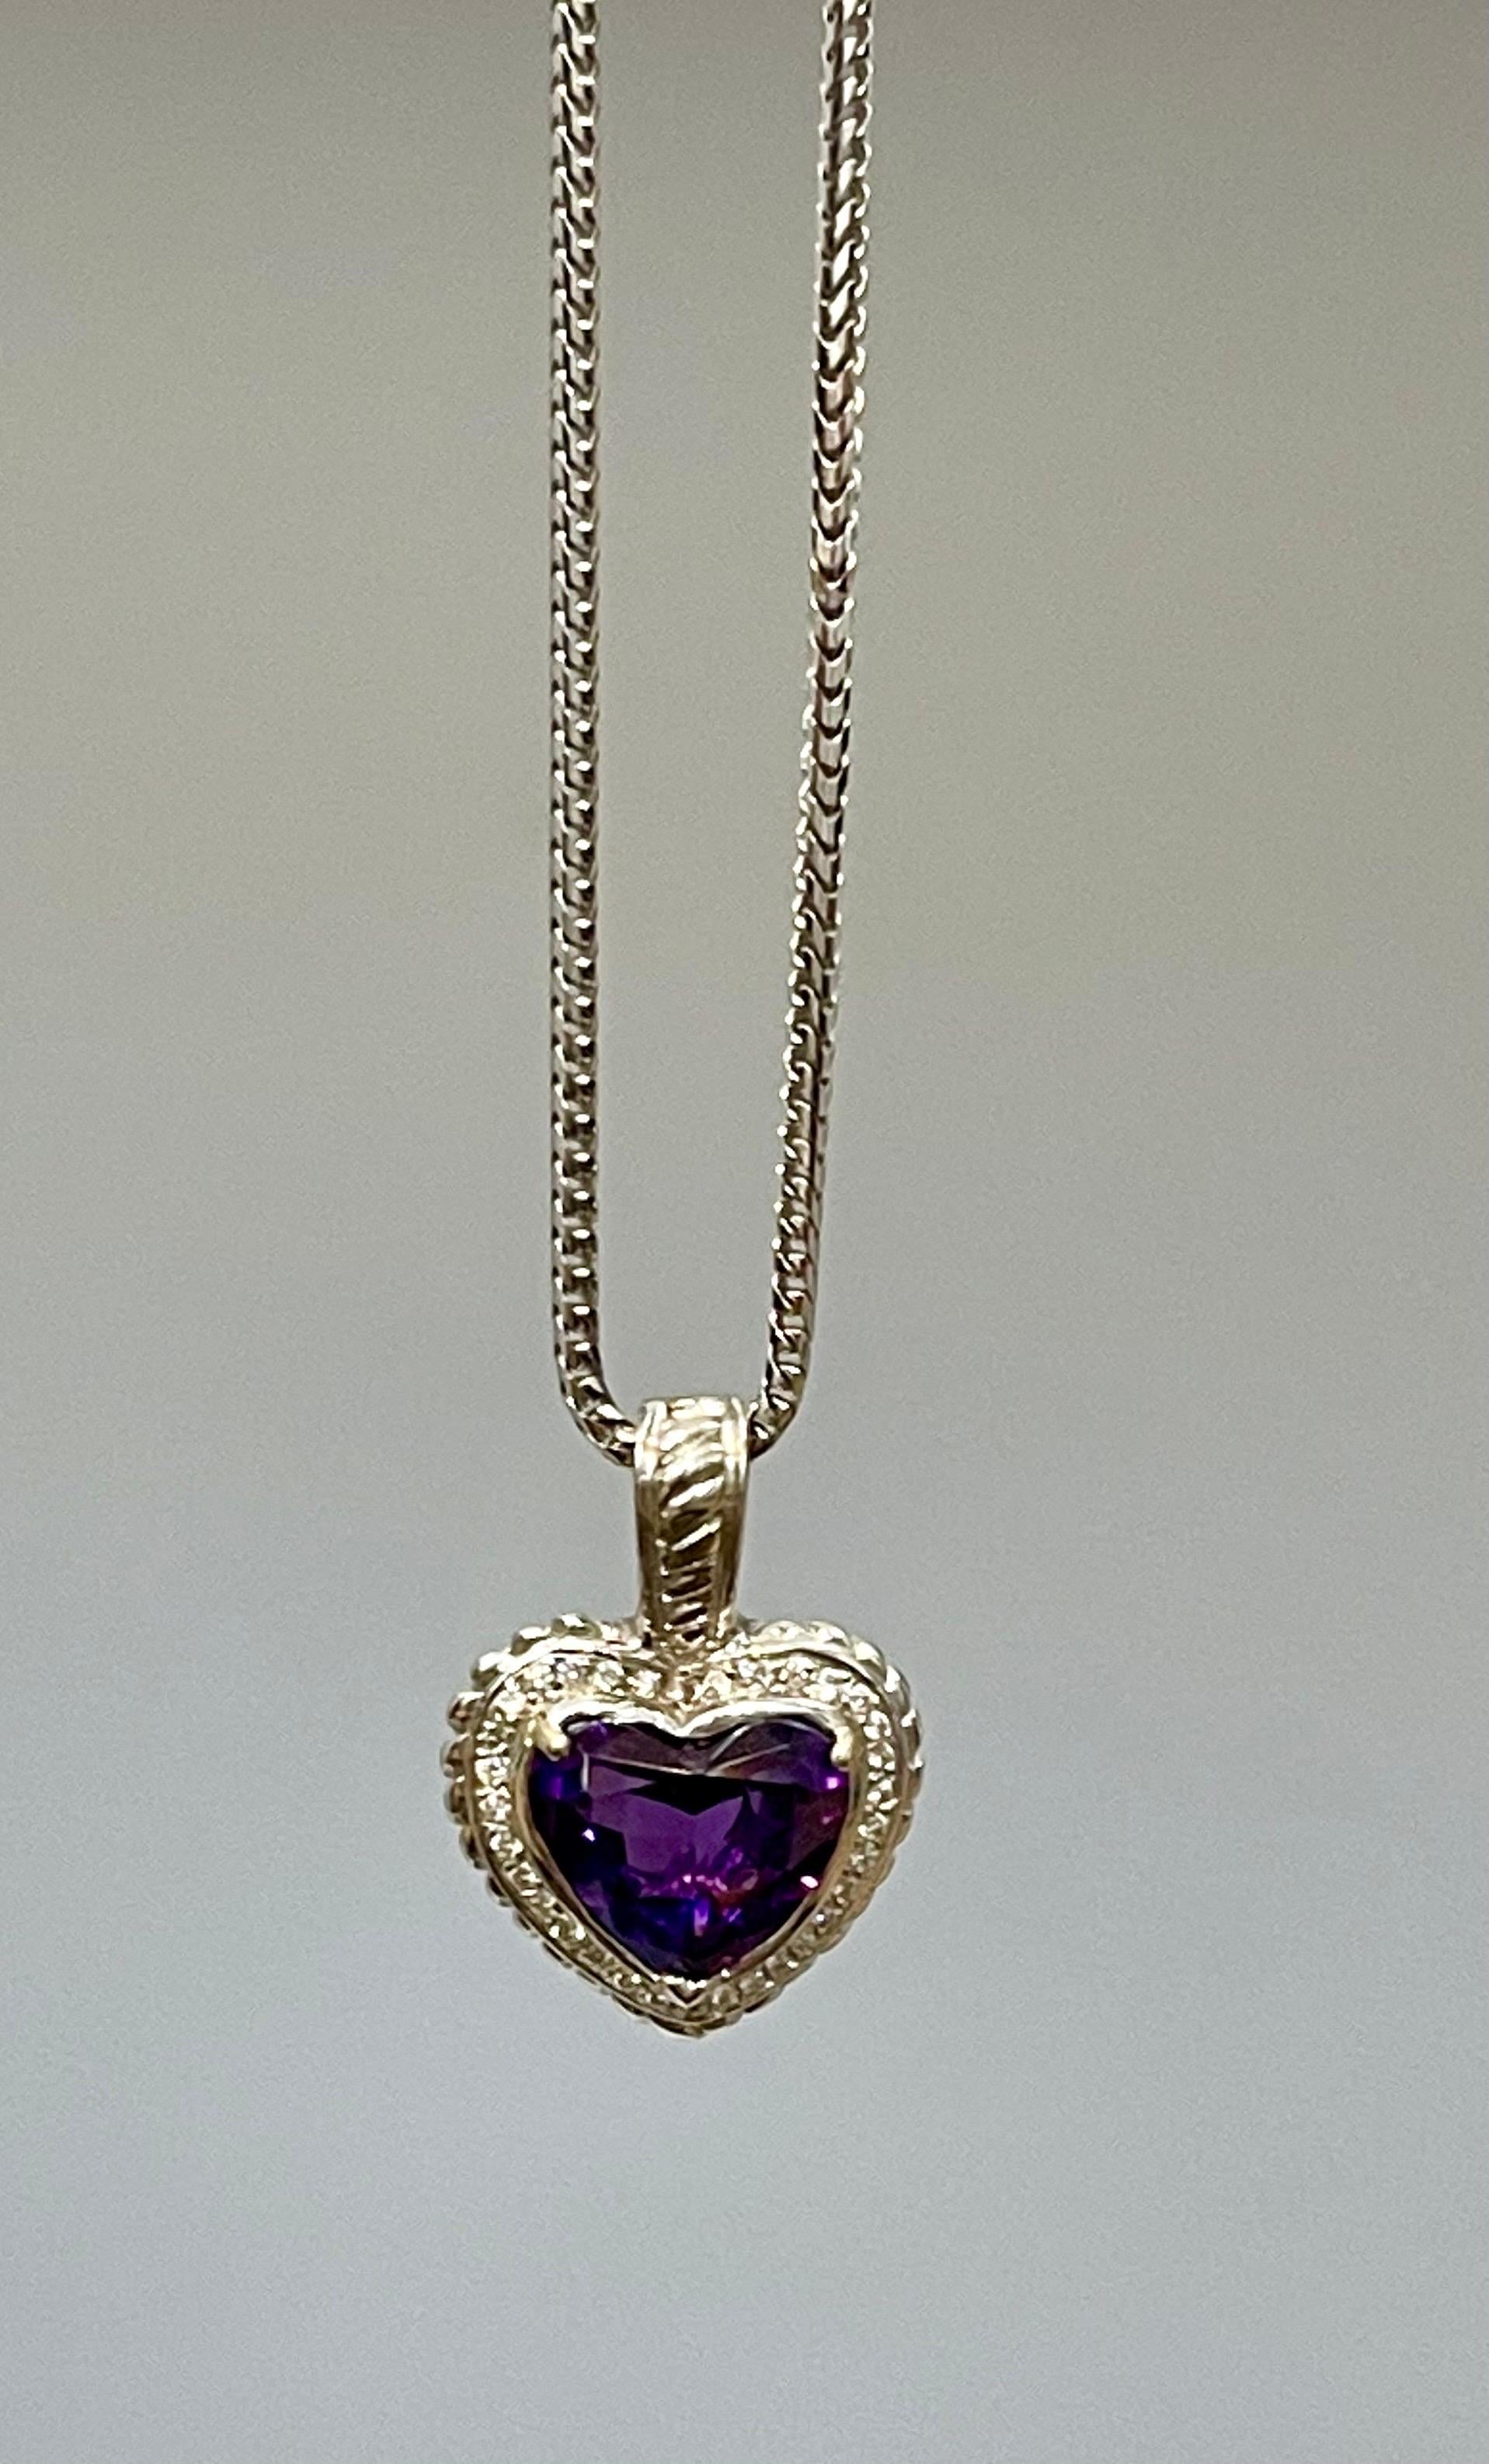 10 Carat Heart Shape Amethyst & 1 Ct Diamond Pendant Necklace 18 Kt White Gold 5